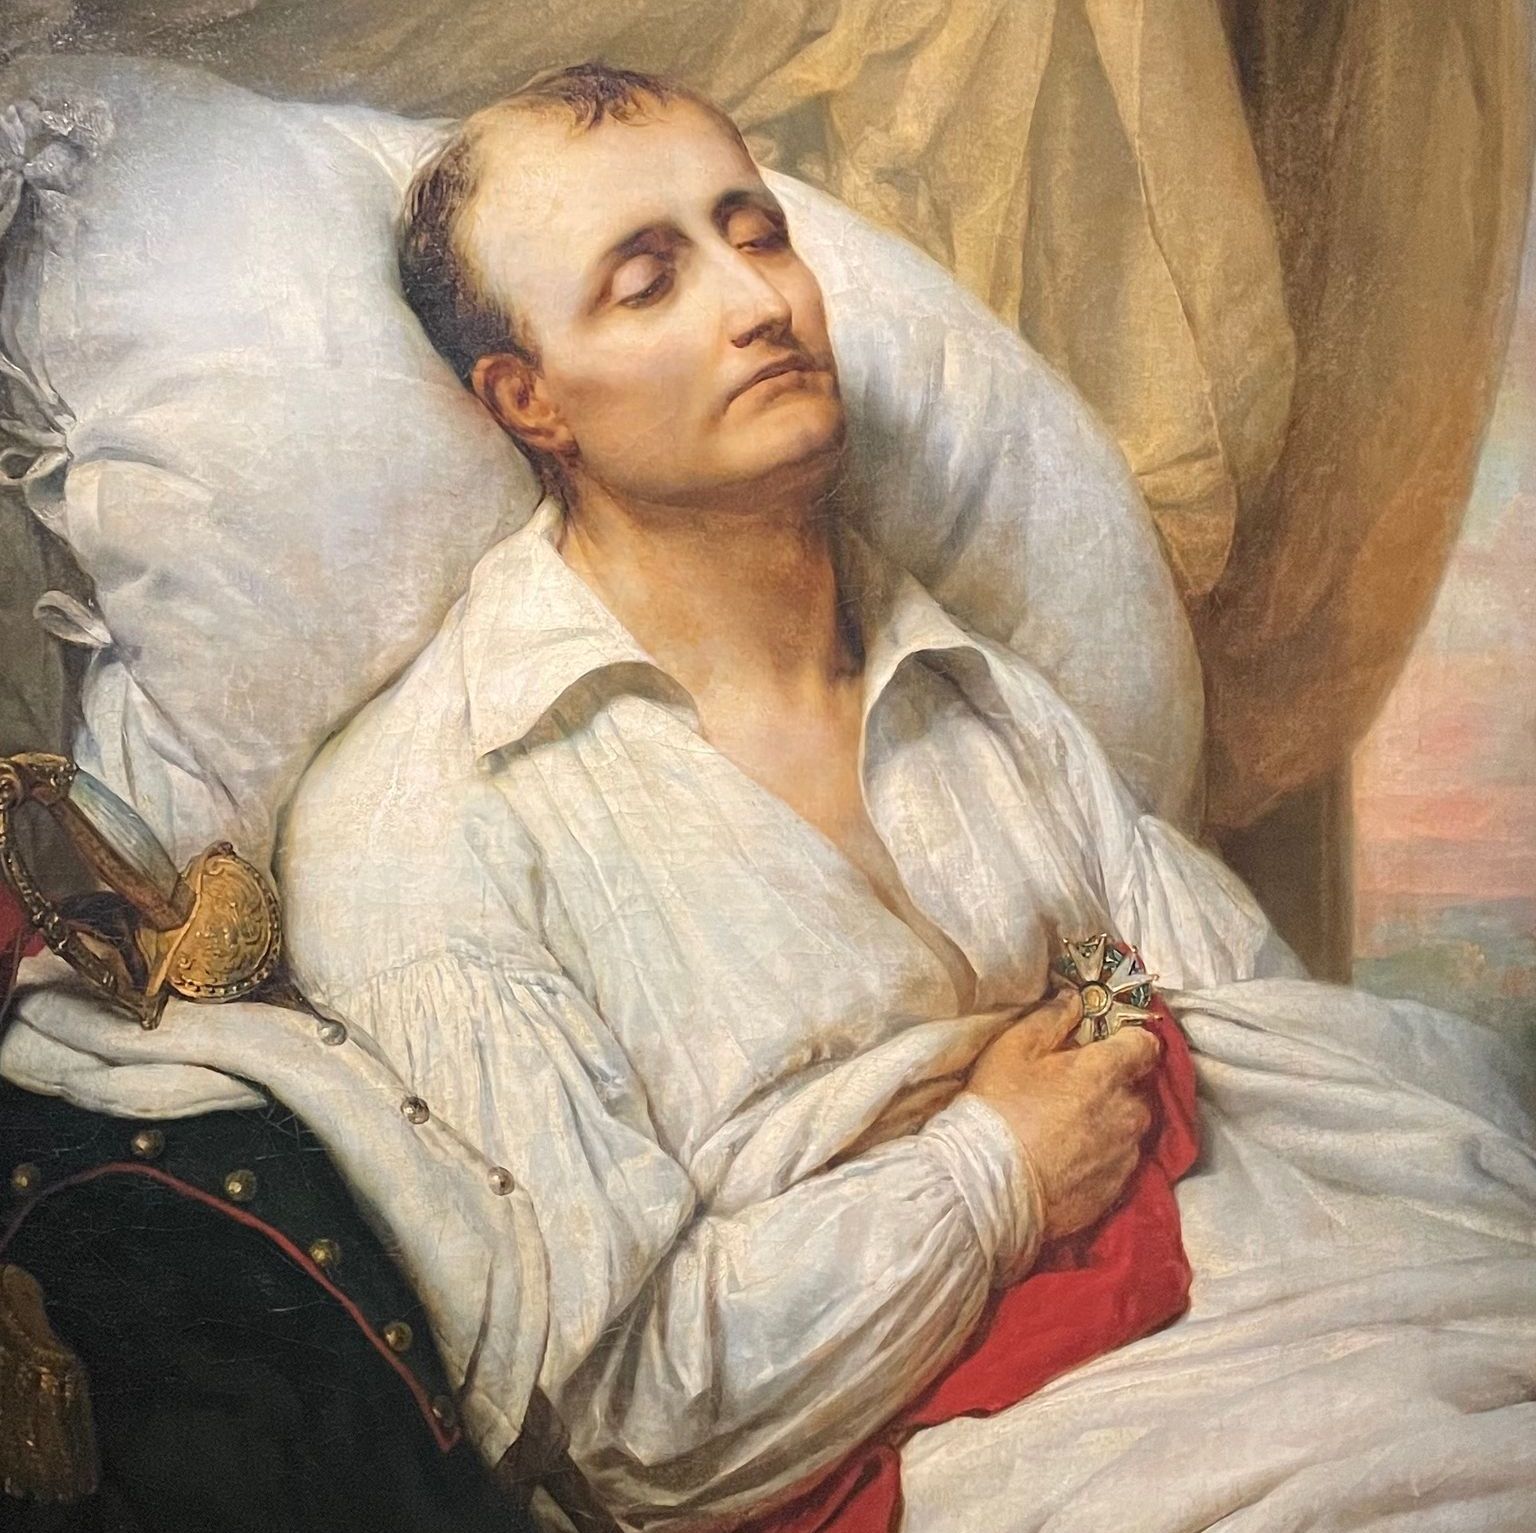 Death of Bonaparte, oil on canvas